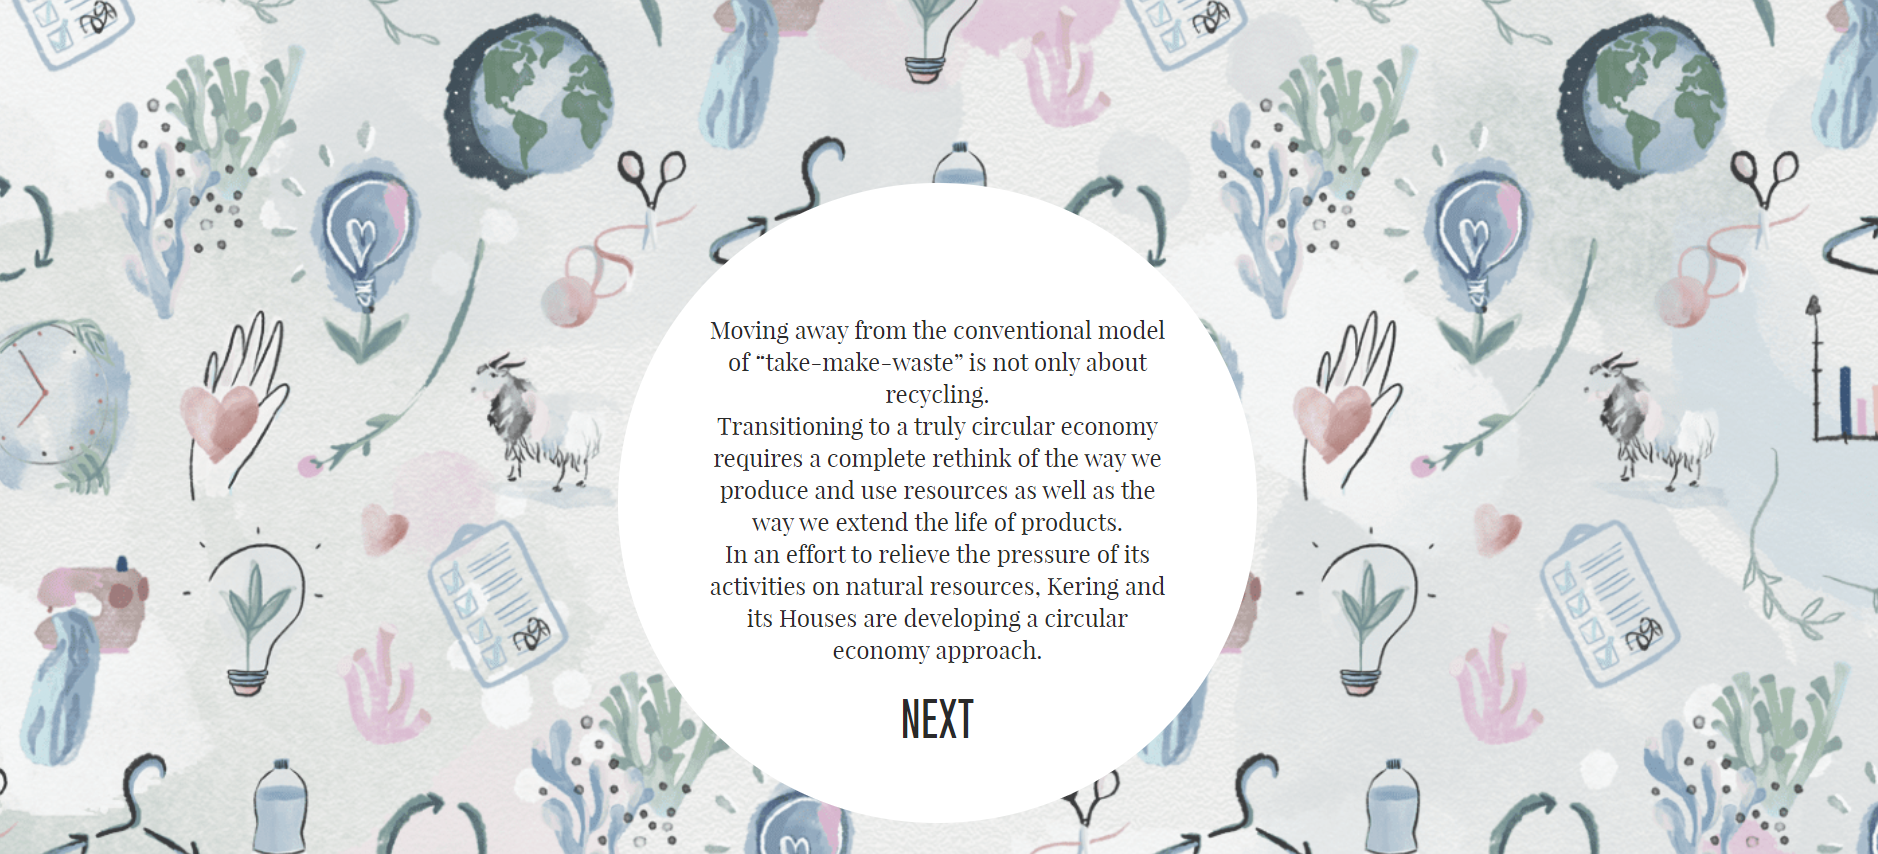 开云集团推出 Crafting Tomorrow’s Luxury challenge 公共平台，面向公众介绍可持续举措